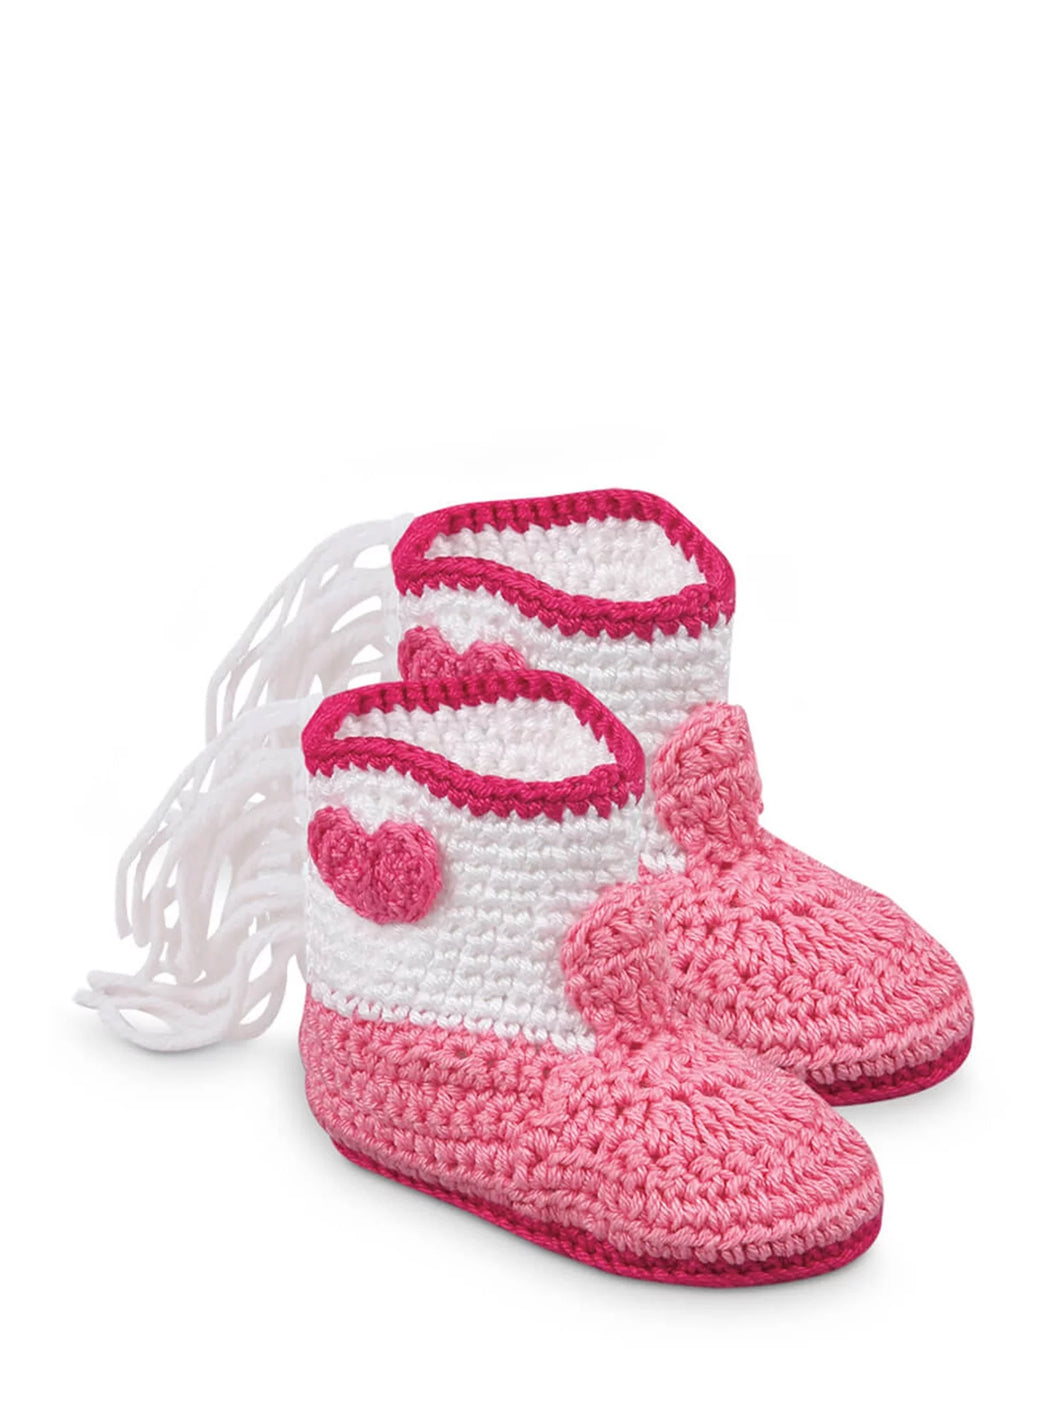 Jefferies Socks Newborn Cowgirl Crocheted Boots